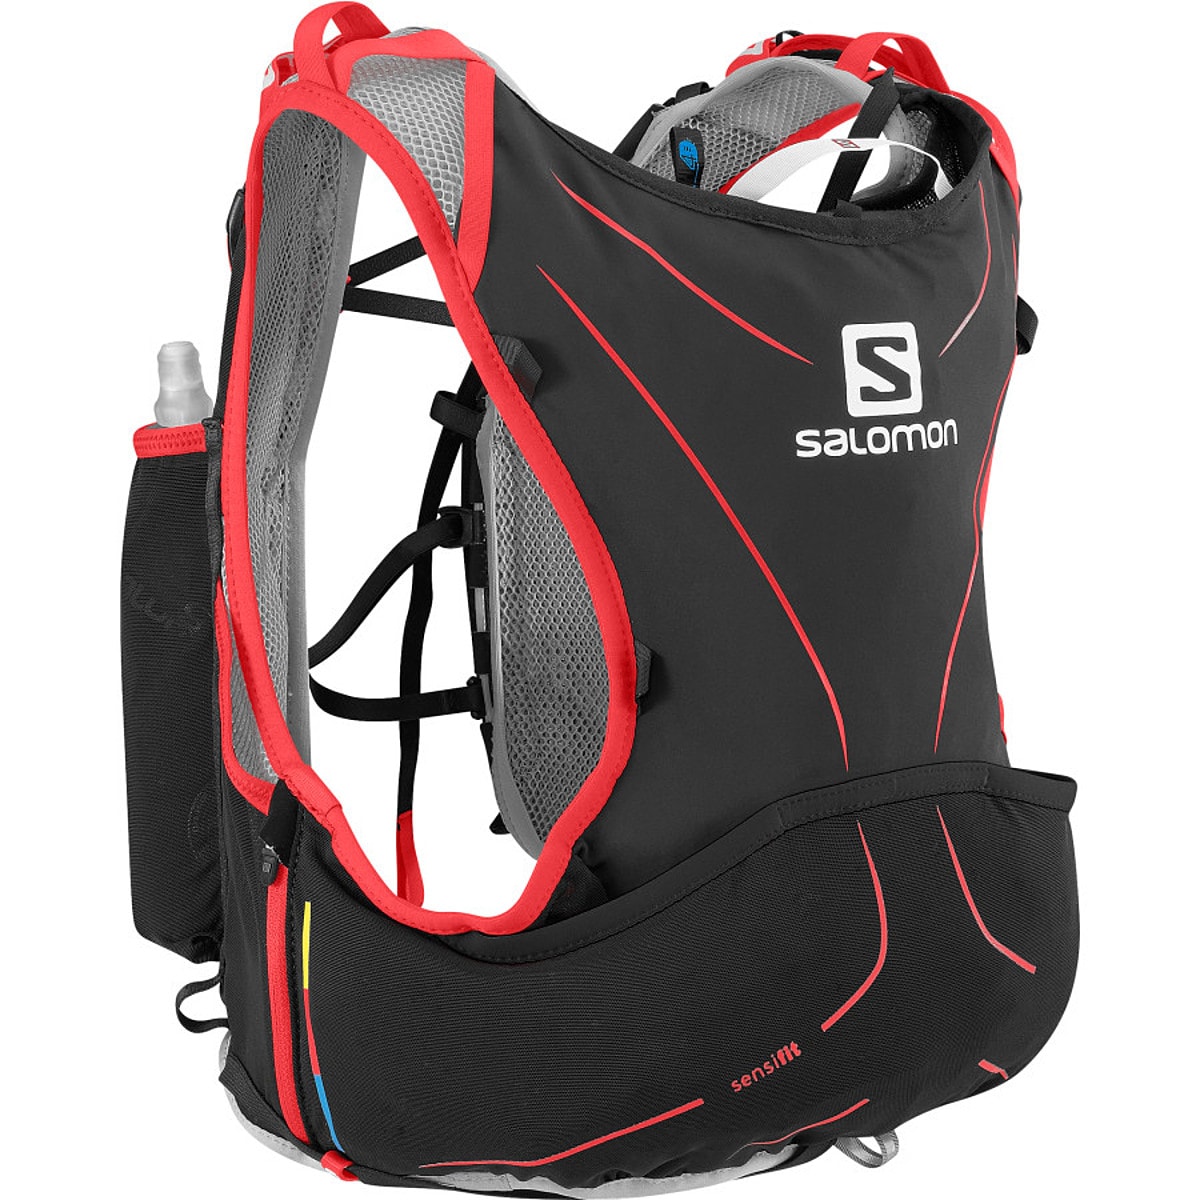 Salomon Advanced Skin S-Lab 5 Hydration Pack Set - 305cu in - Hike & Camp